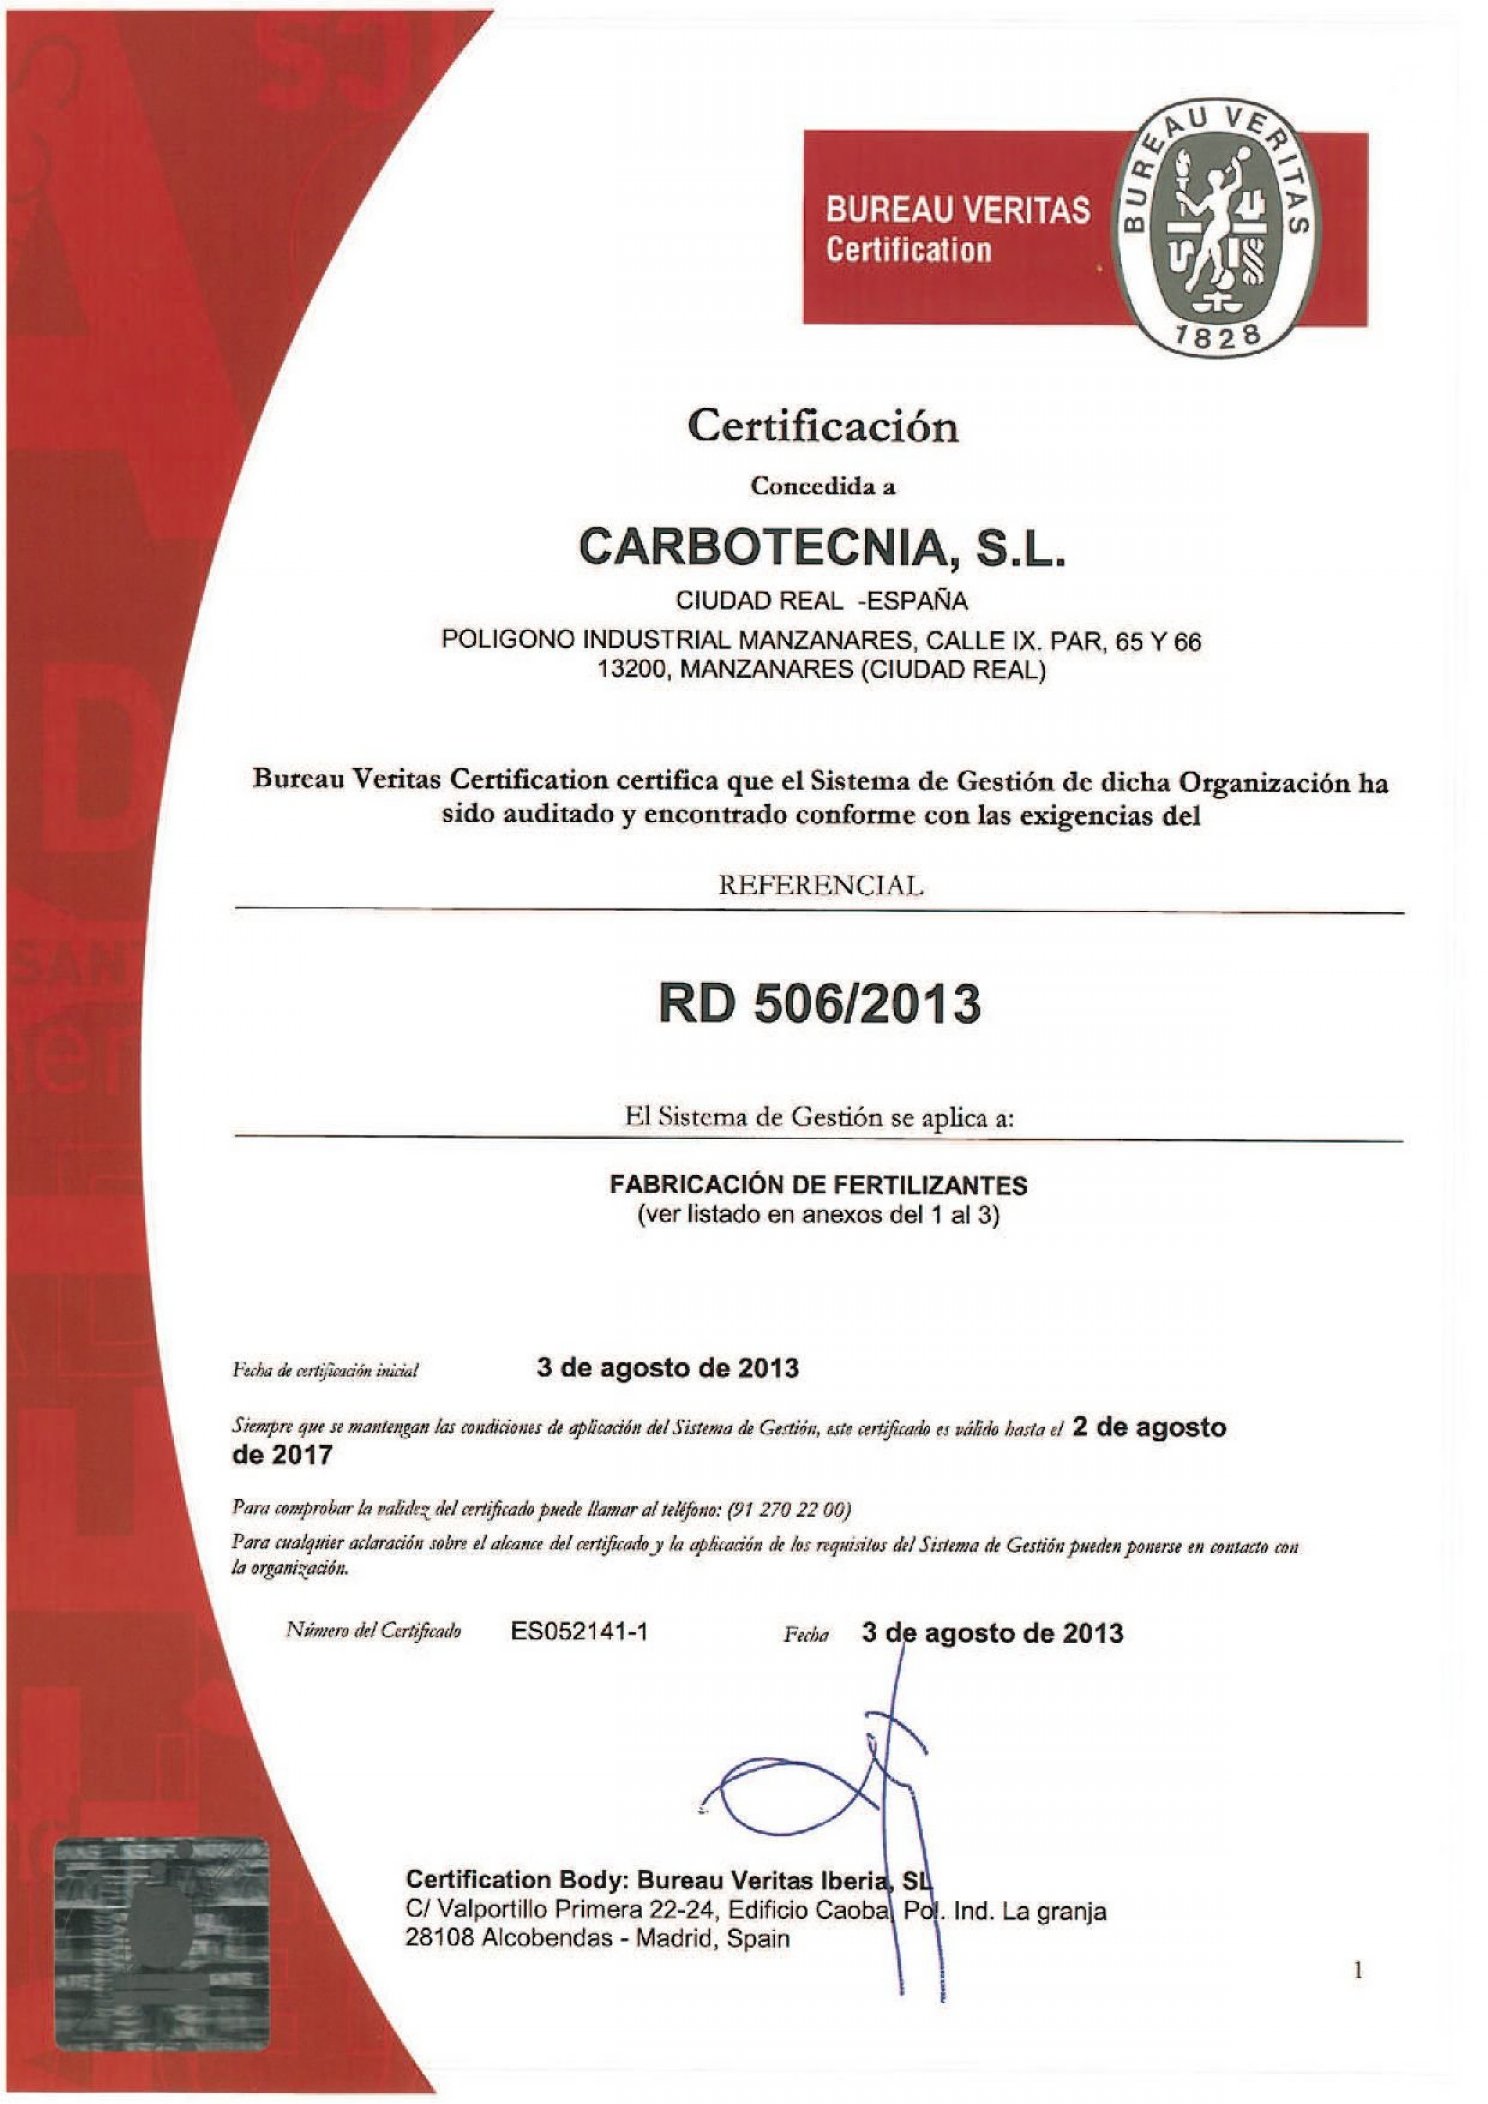 RD 506/2013 Certification